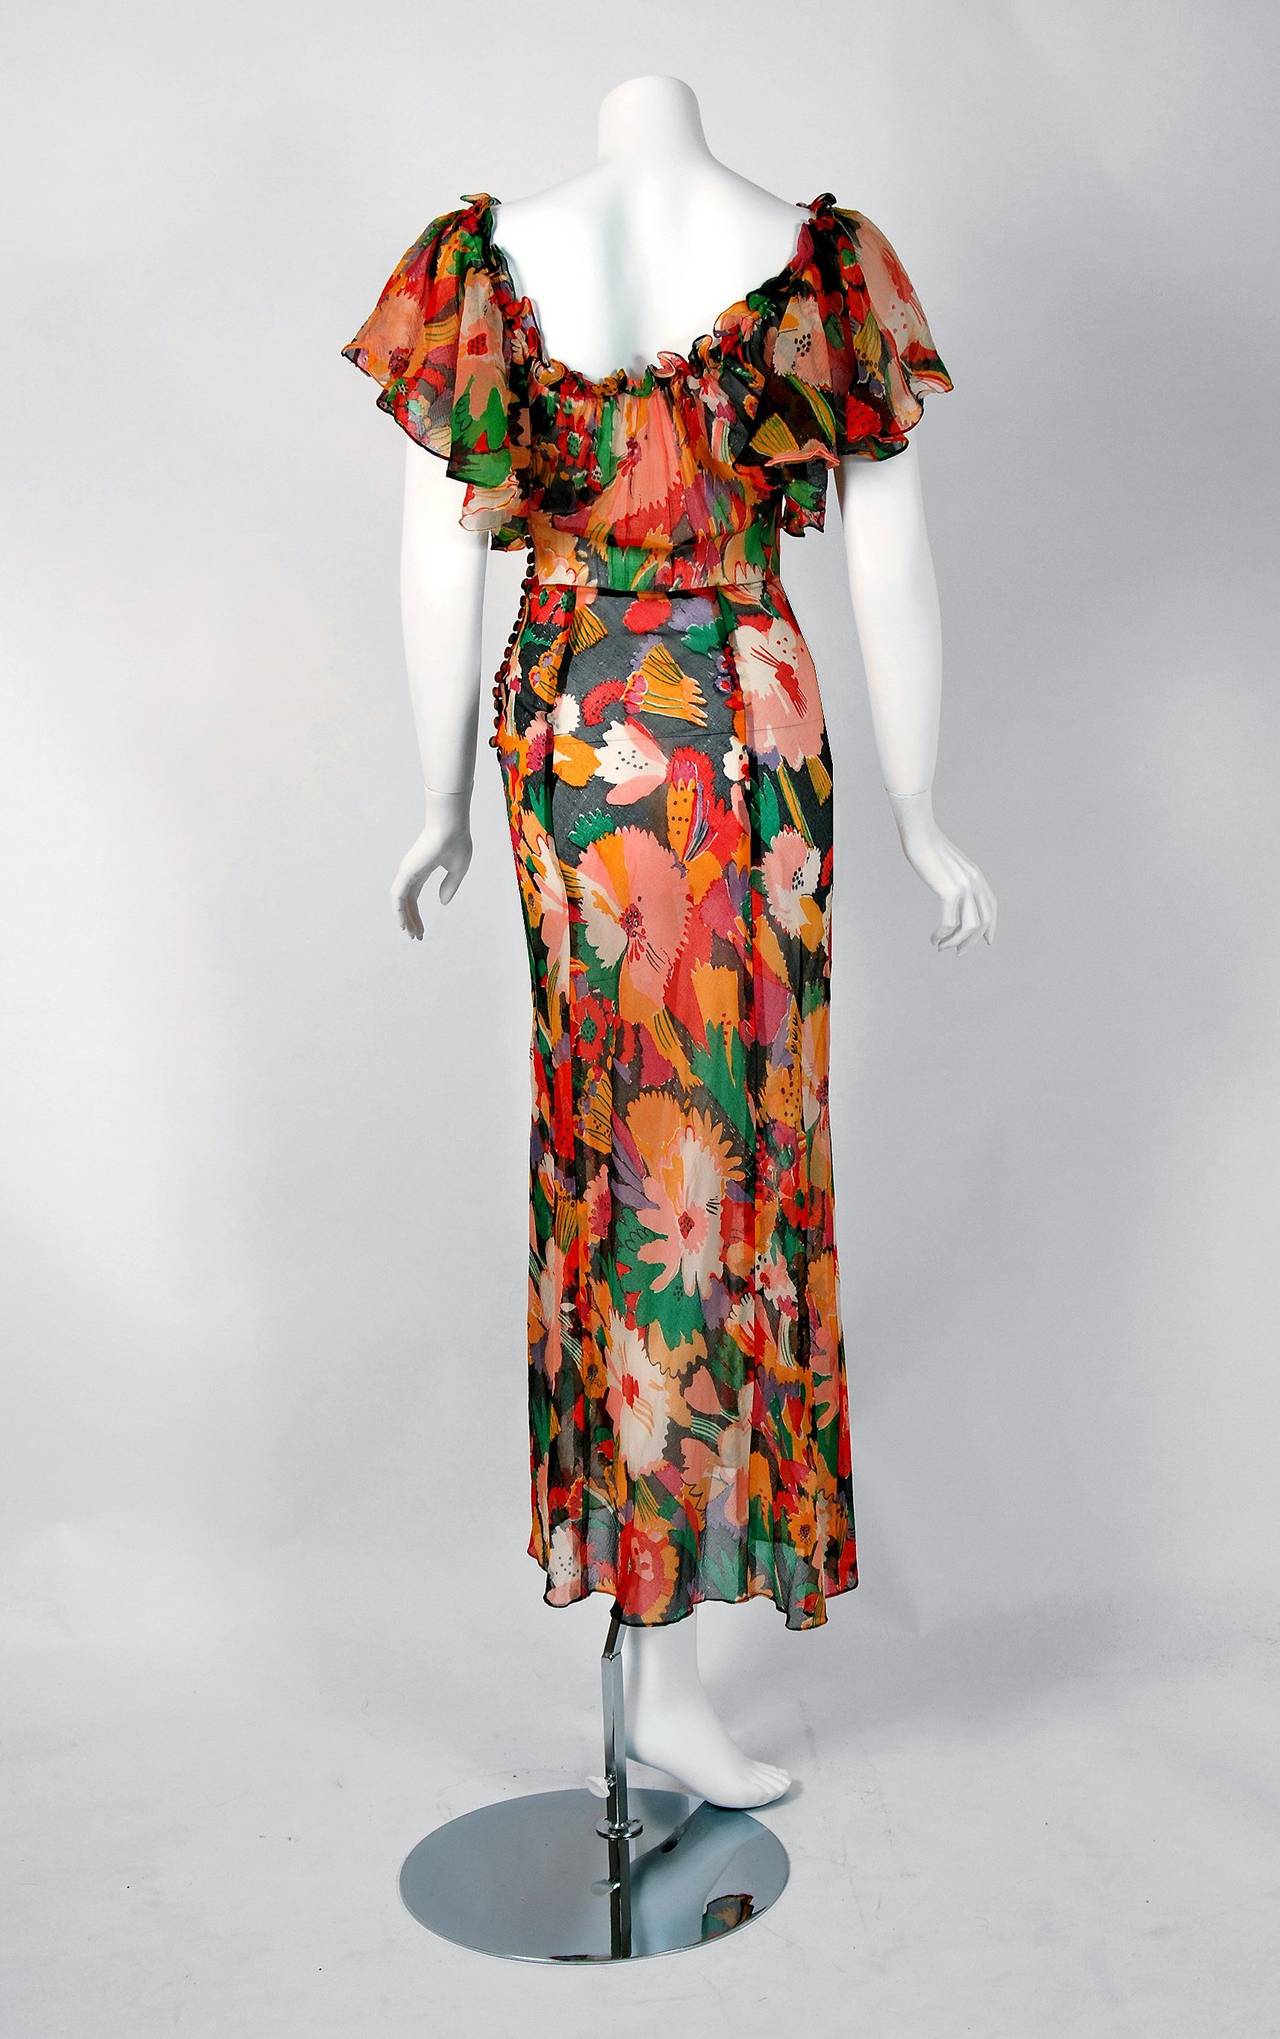 Women's 1973 Ossie Clark Documented Colorful Floral Celia Birtwell Print Chiffon Dress